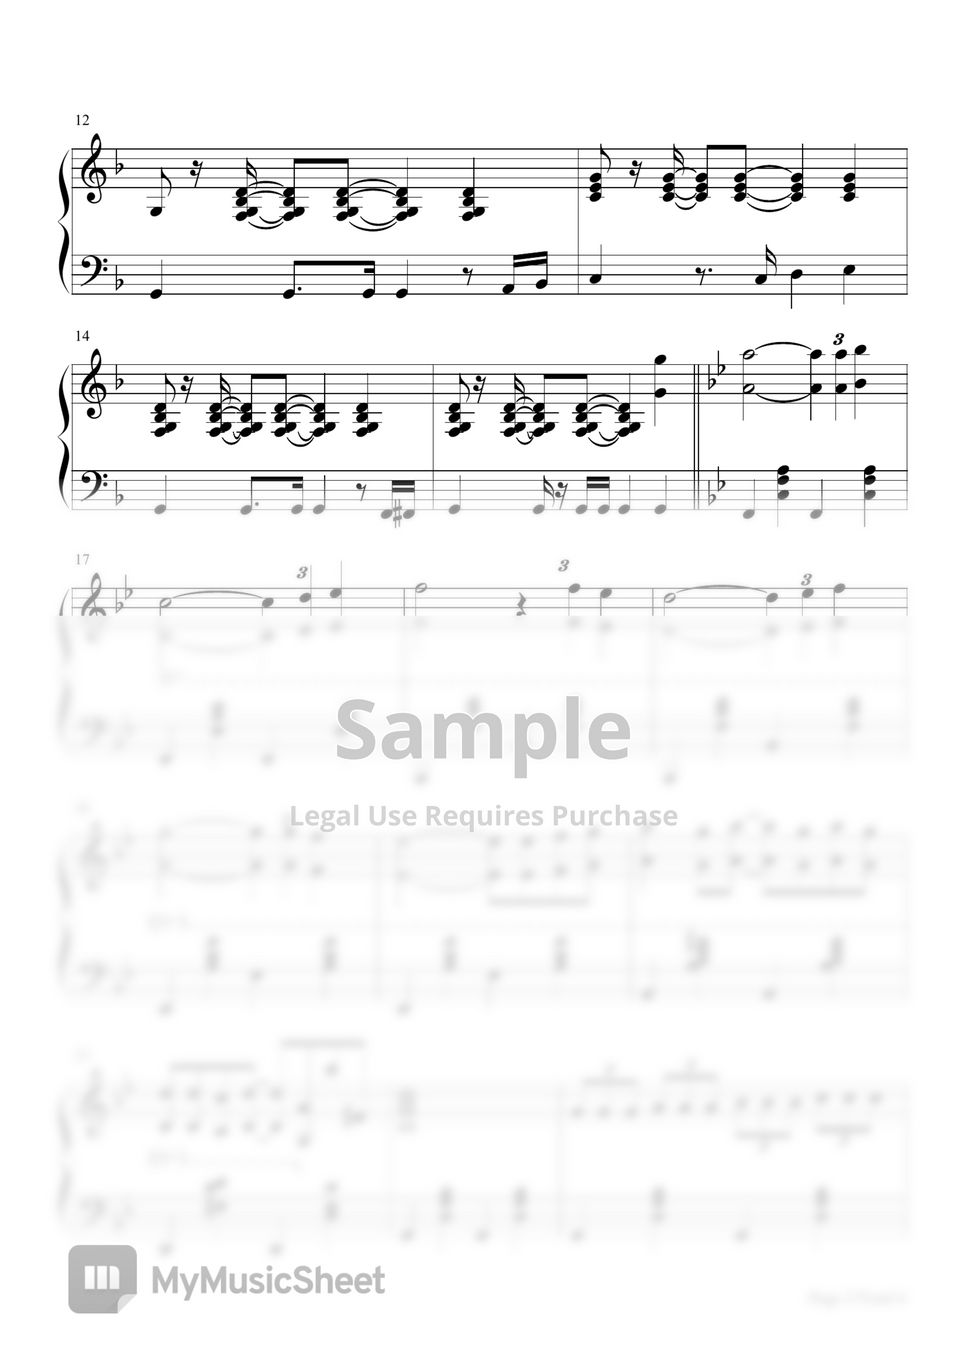 Johann Sebastian Bach - Toccata and Fugue in D Minor (Easy Piano Sheet,J.S.Bach,BWV 565，《d小调托卡塔与赋格》BWV 565，简化版，巴赫) by poon